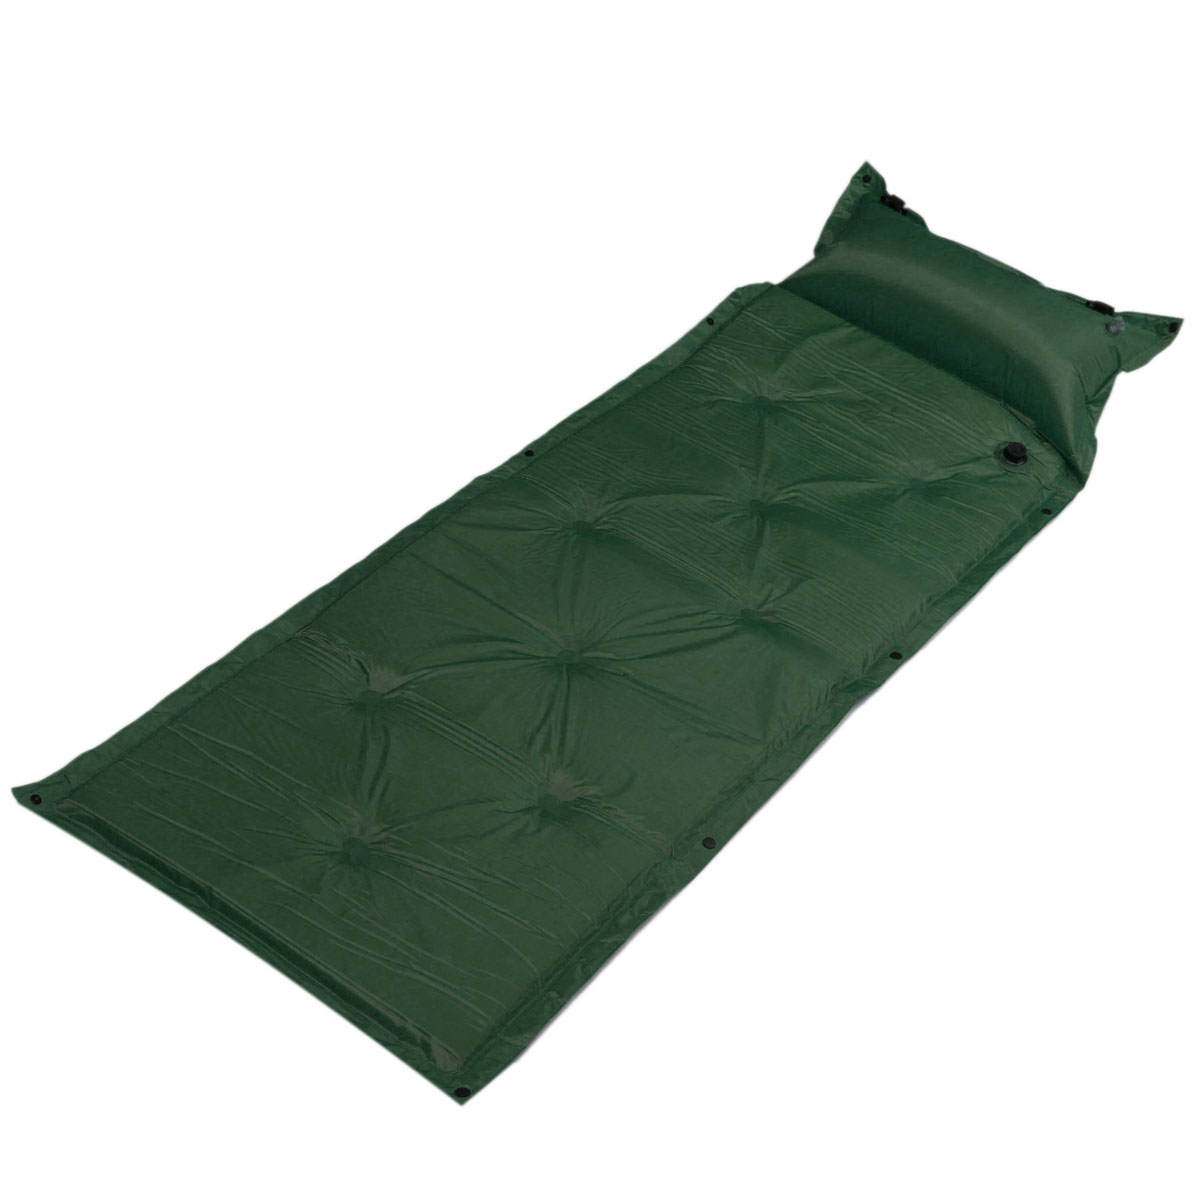 IPReereg-183x57x25cm-Self-Inflatable-Air-Mattress-Camping-Moisture-Proof-Pad-Sleeping-Mat-1190414-5